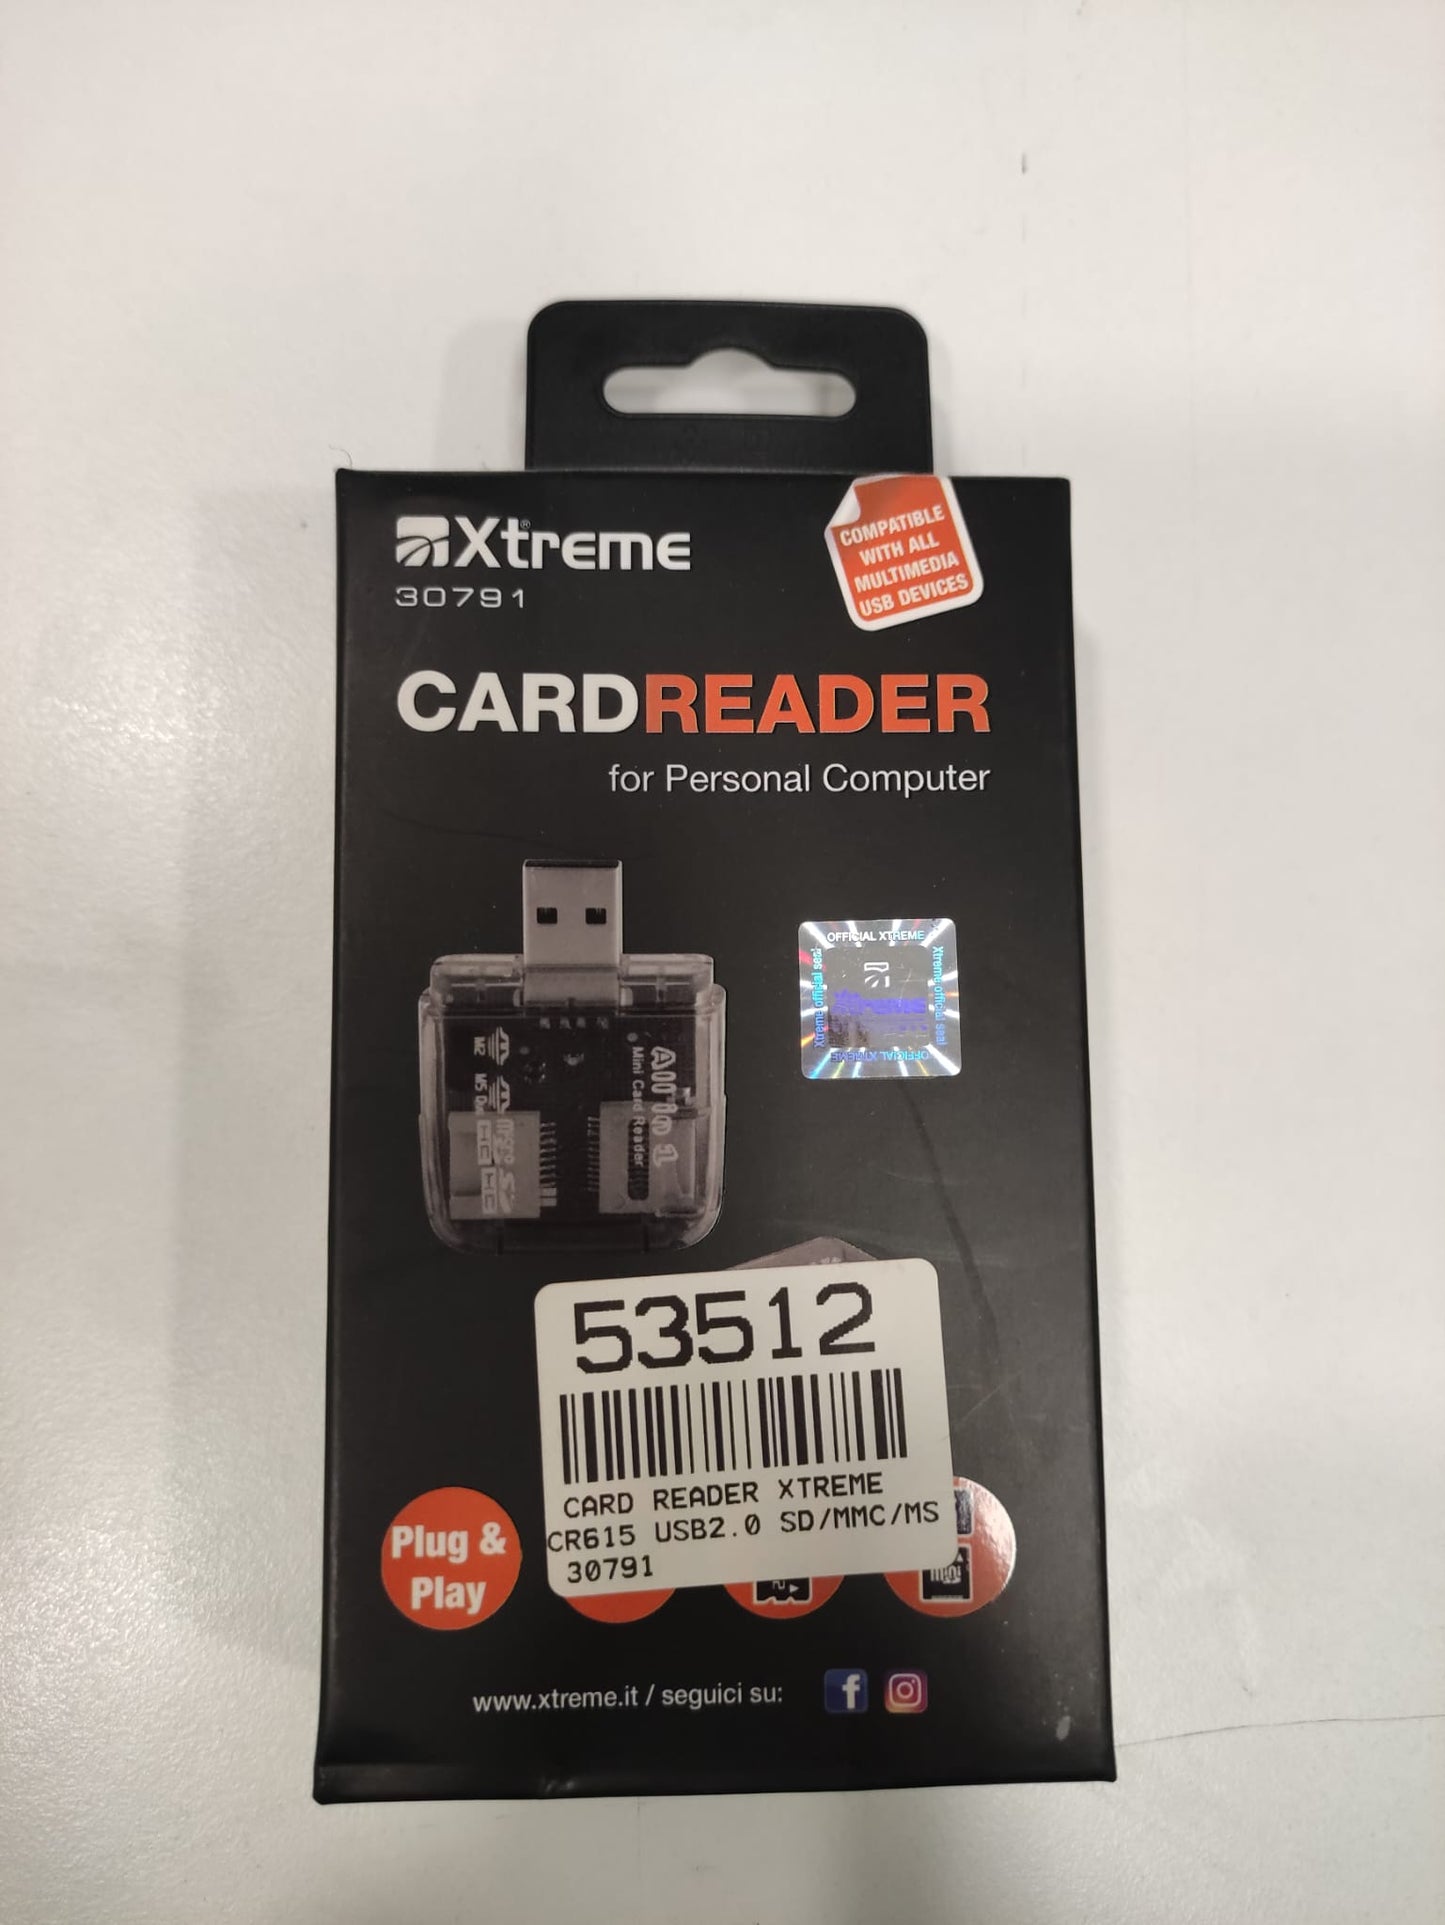 Lettore Multicard esterno Xtreme CR615 USB 2.0 SD/MMC/MS